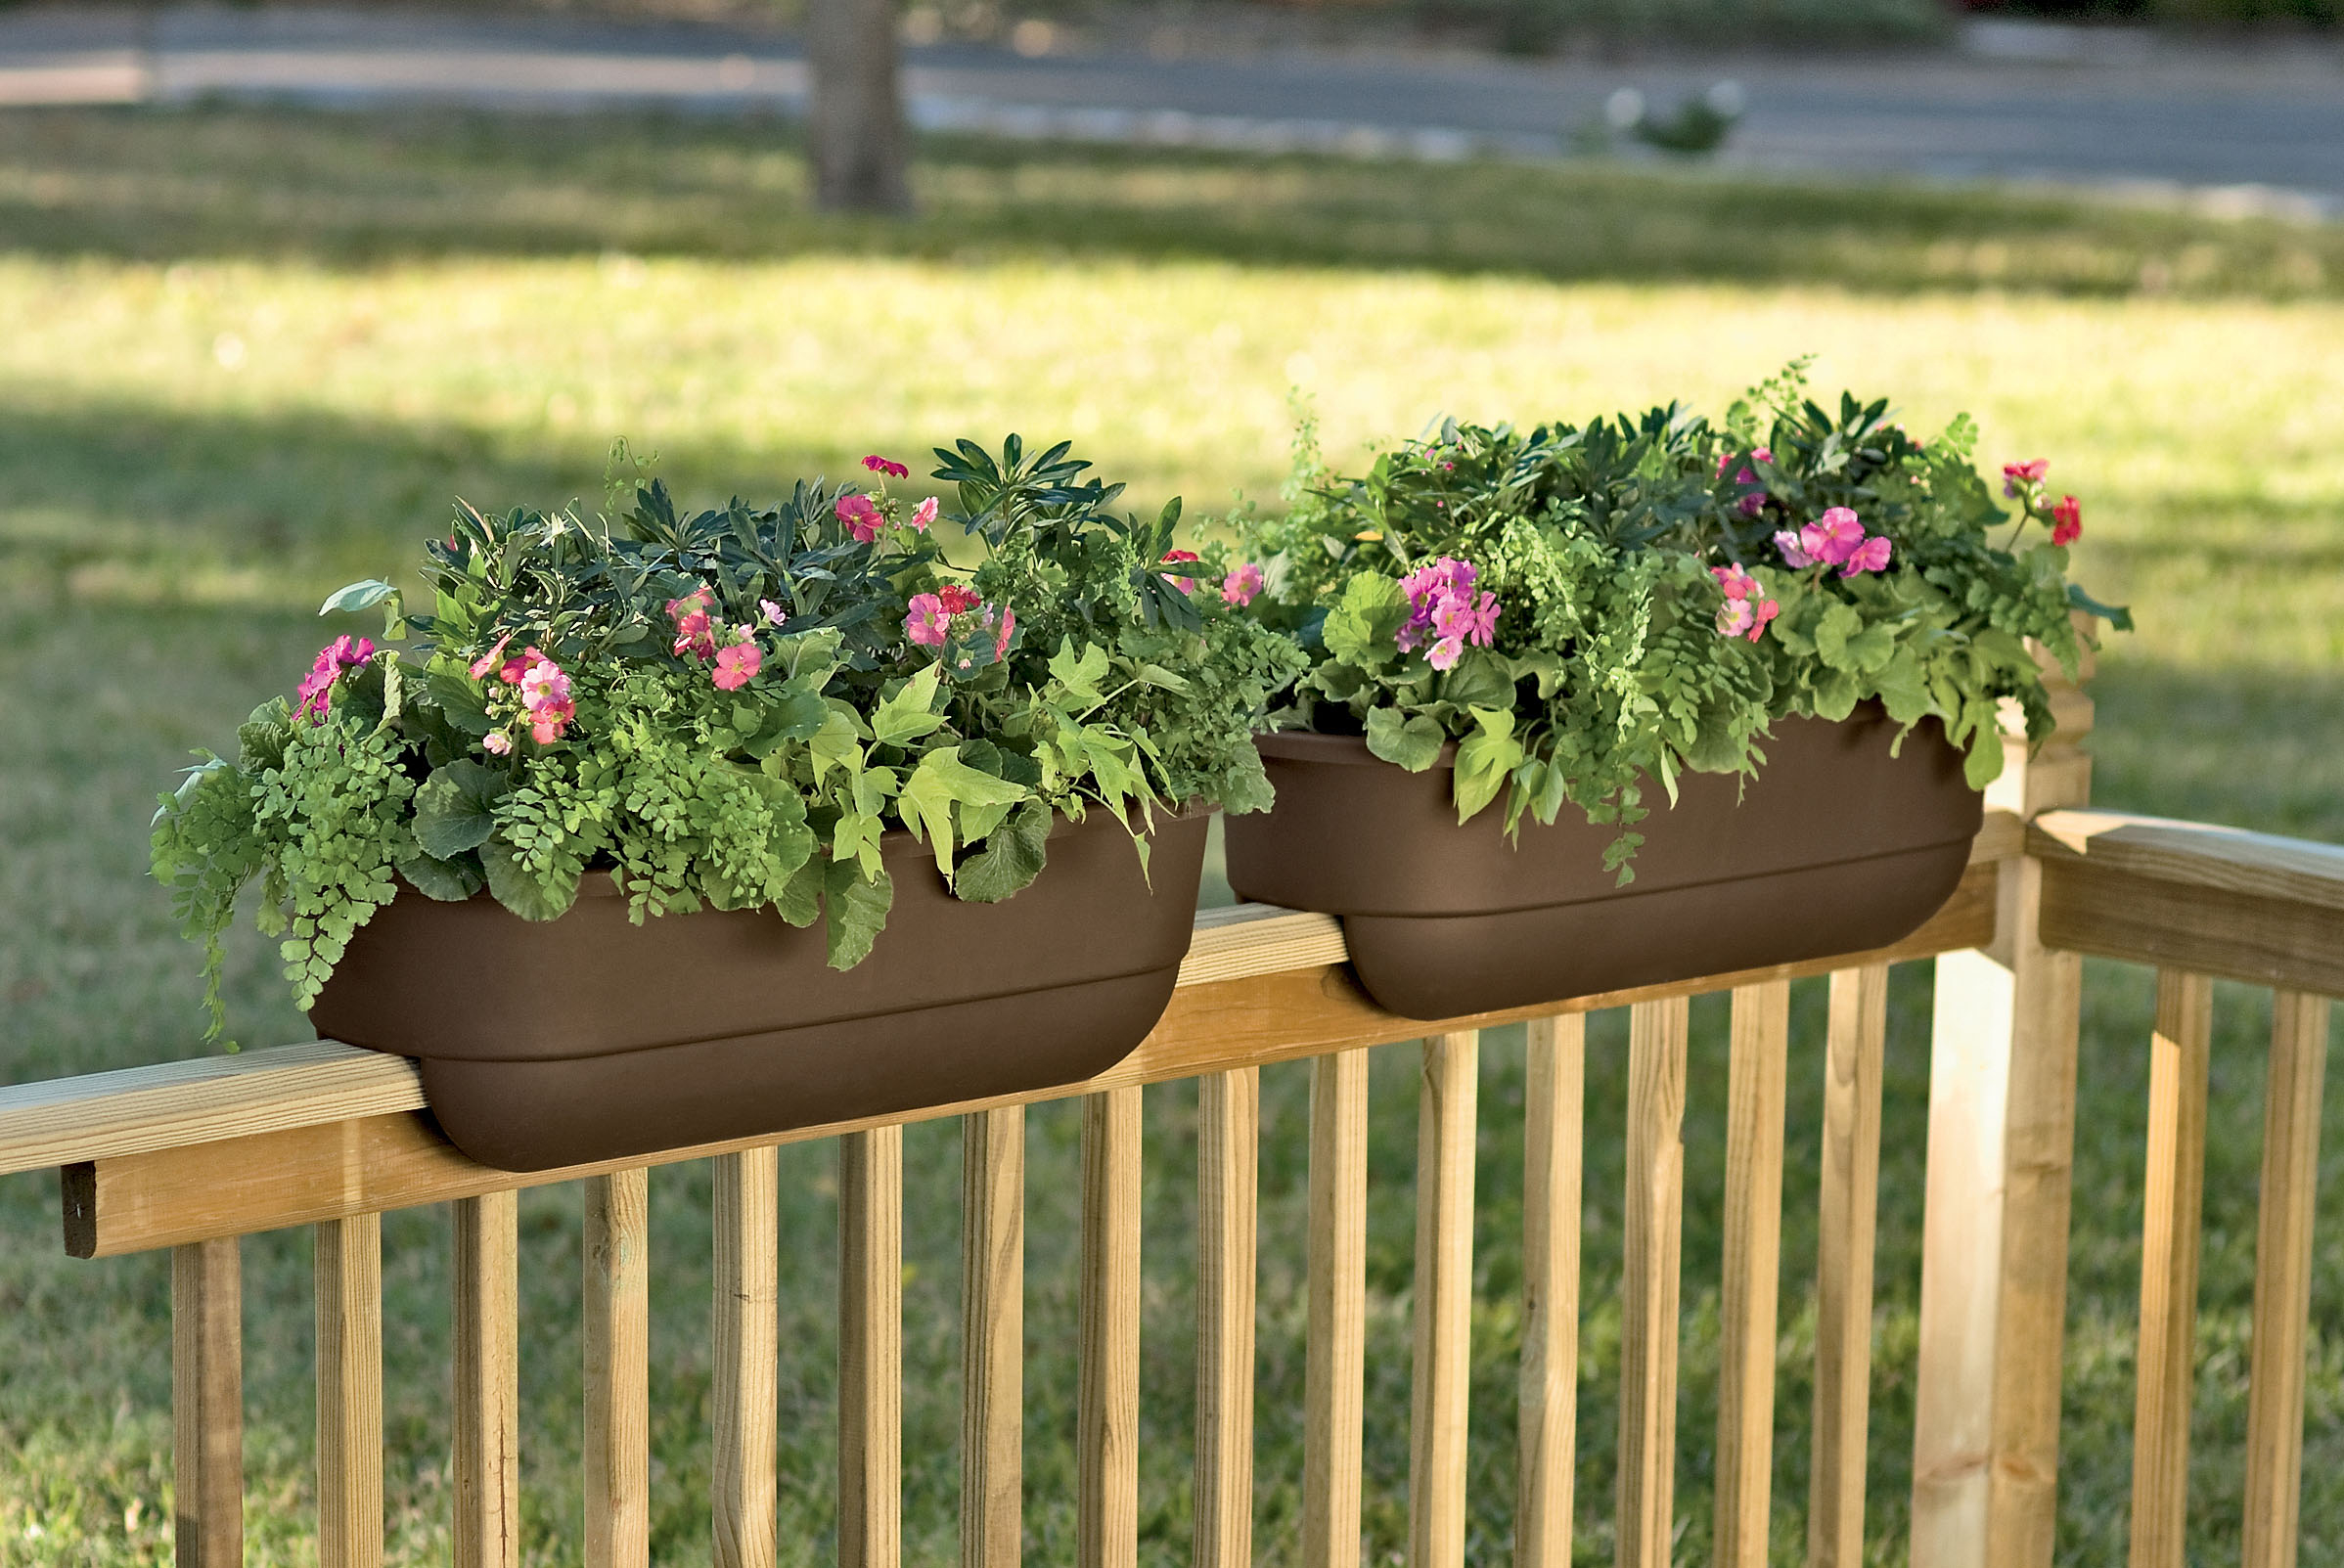 Flower Boxes For Porch Railings Deck Rail Planter Help Children within dimensions 2396 X 1603